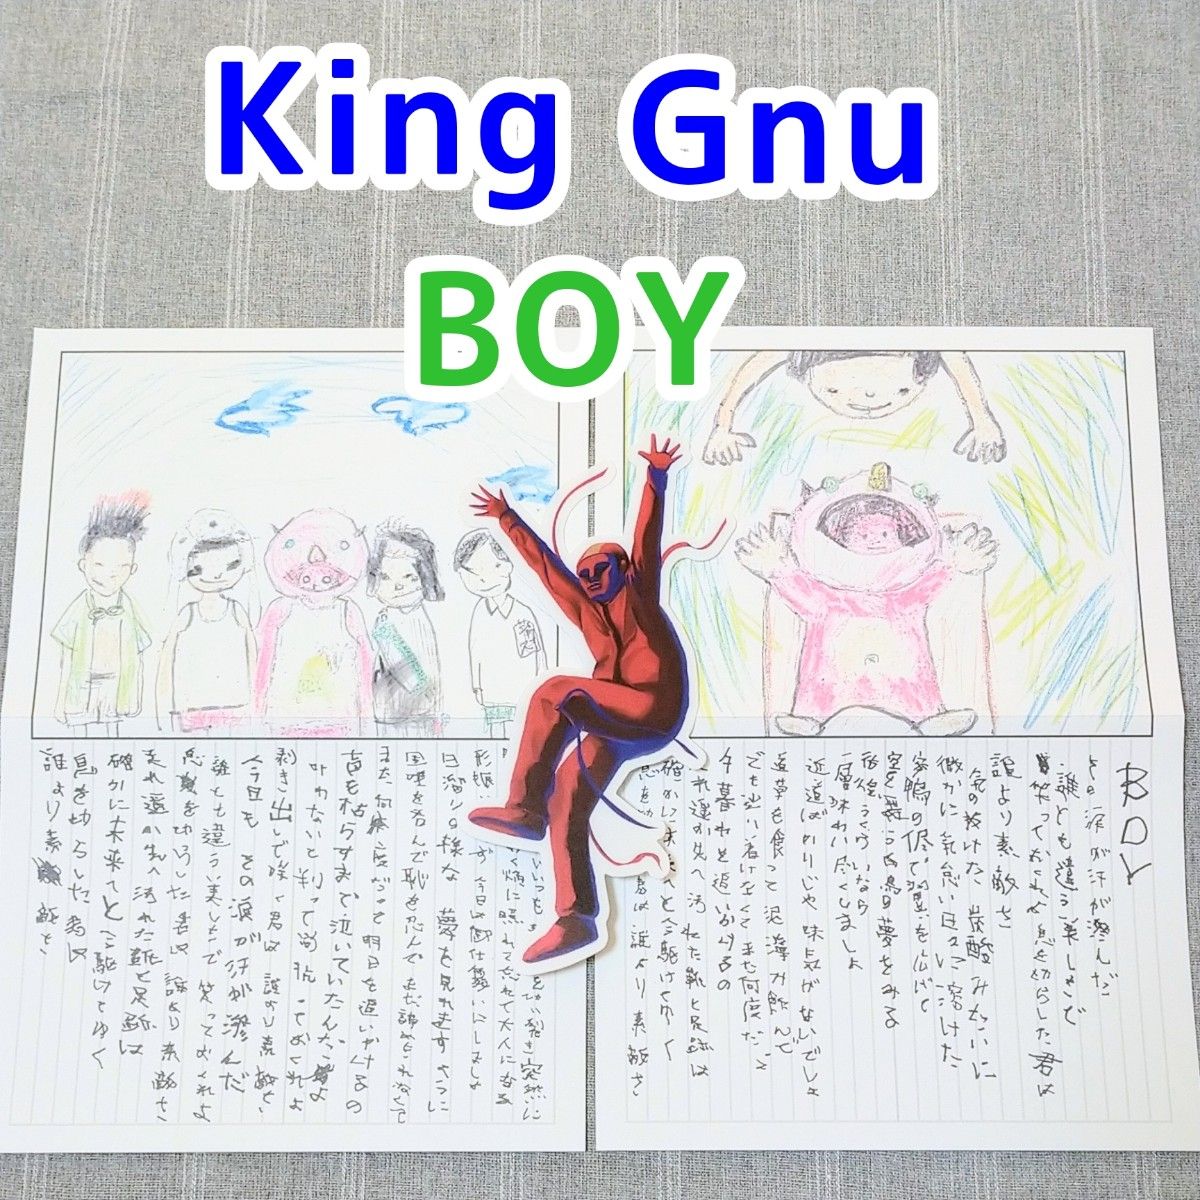 King Gnu　THE GREATEST UNKNOWN　初回限定盤　歌詞カードのみ　BOY STARDOM 王様ランキング